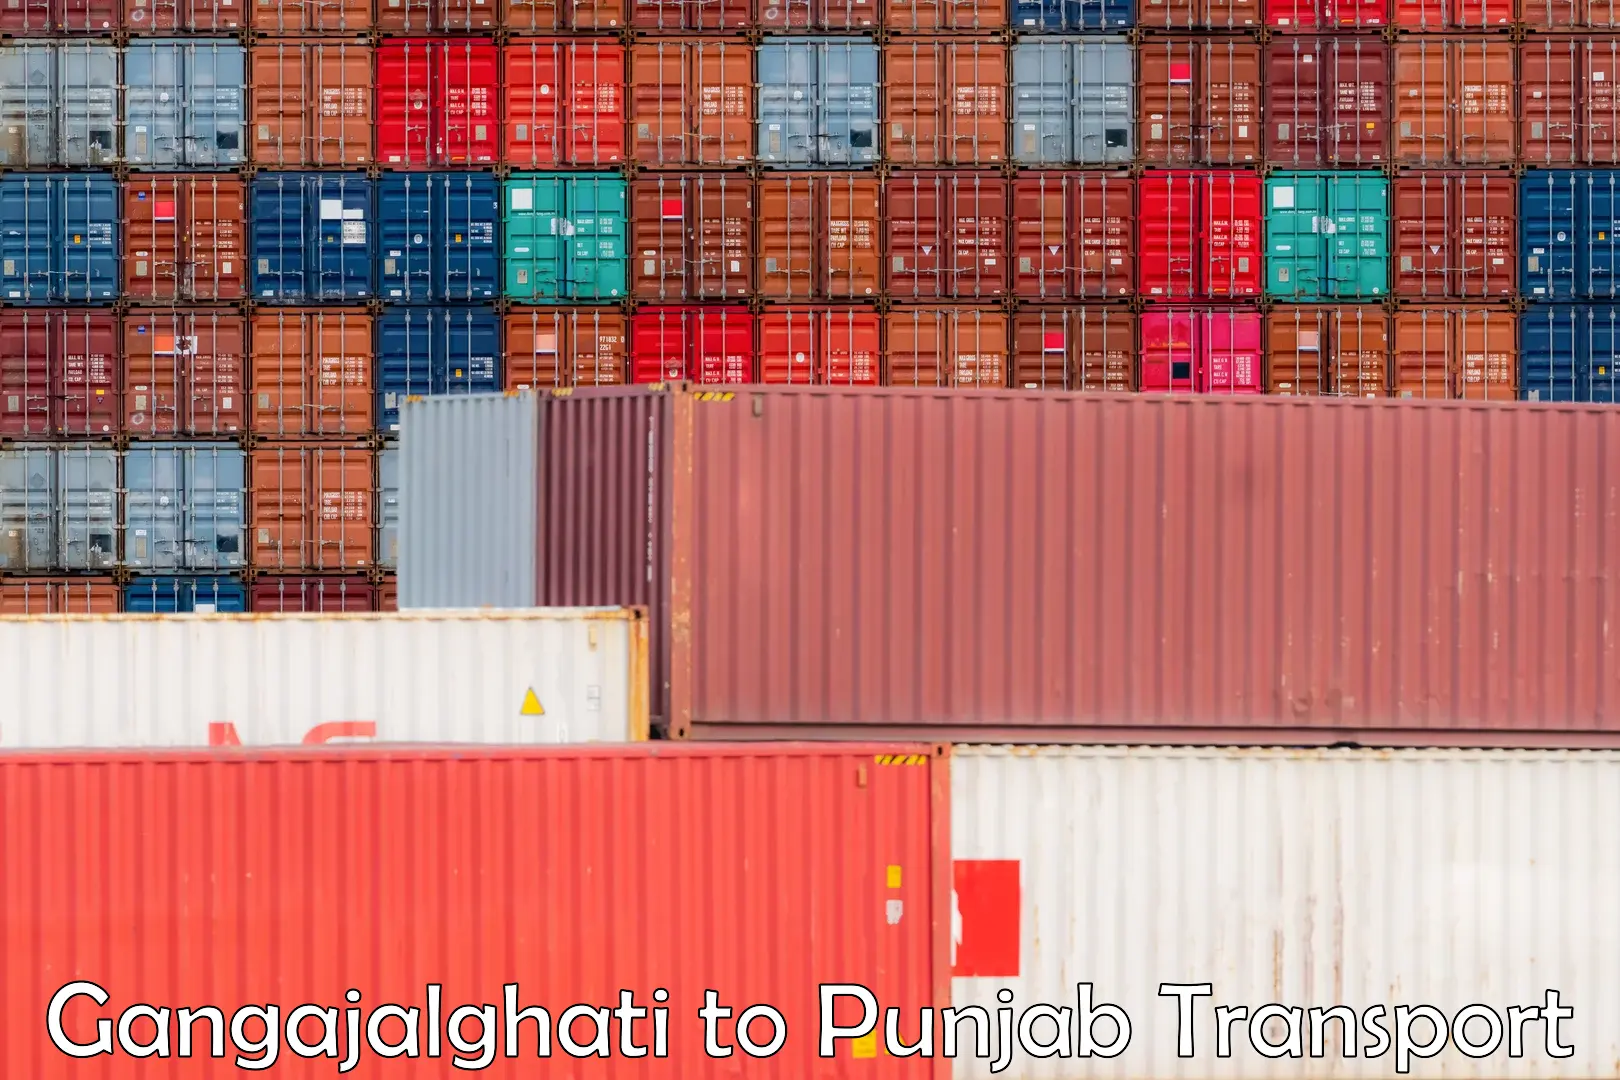 Truck transport companies in India Gangajalghati to Jalandhar